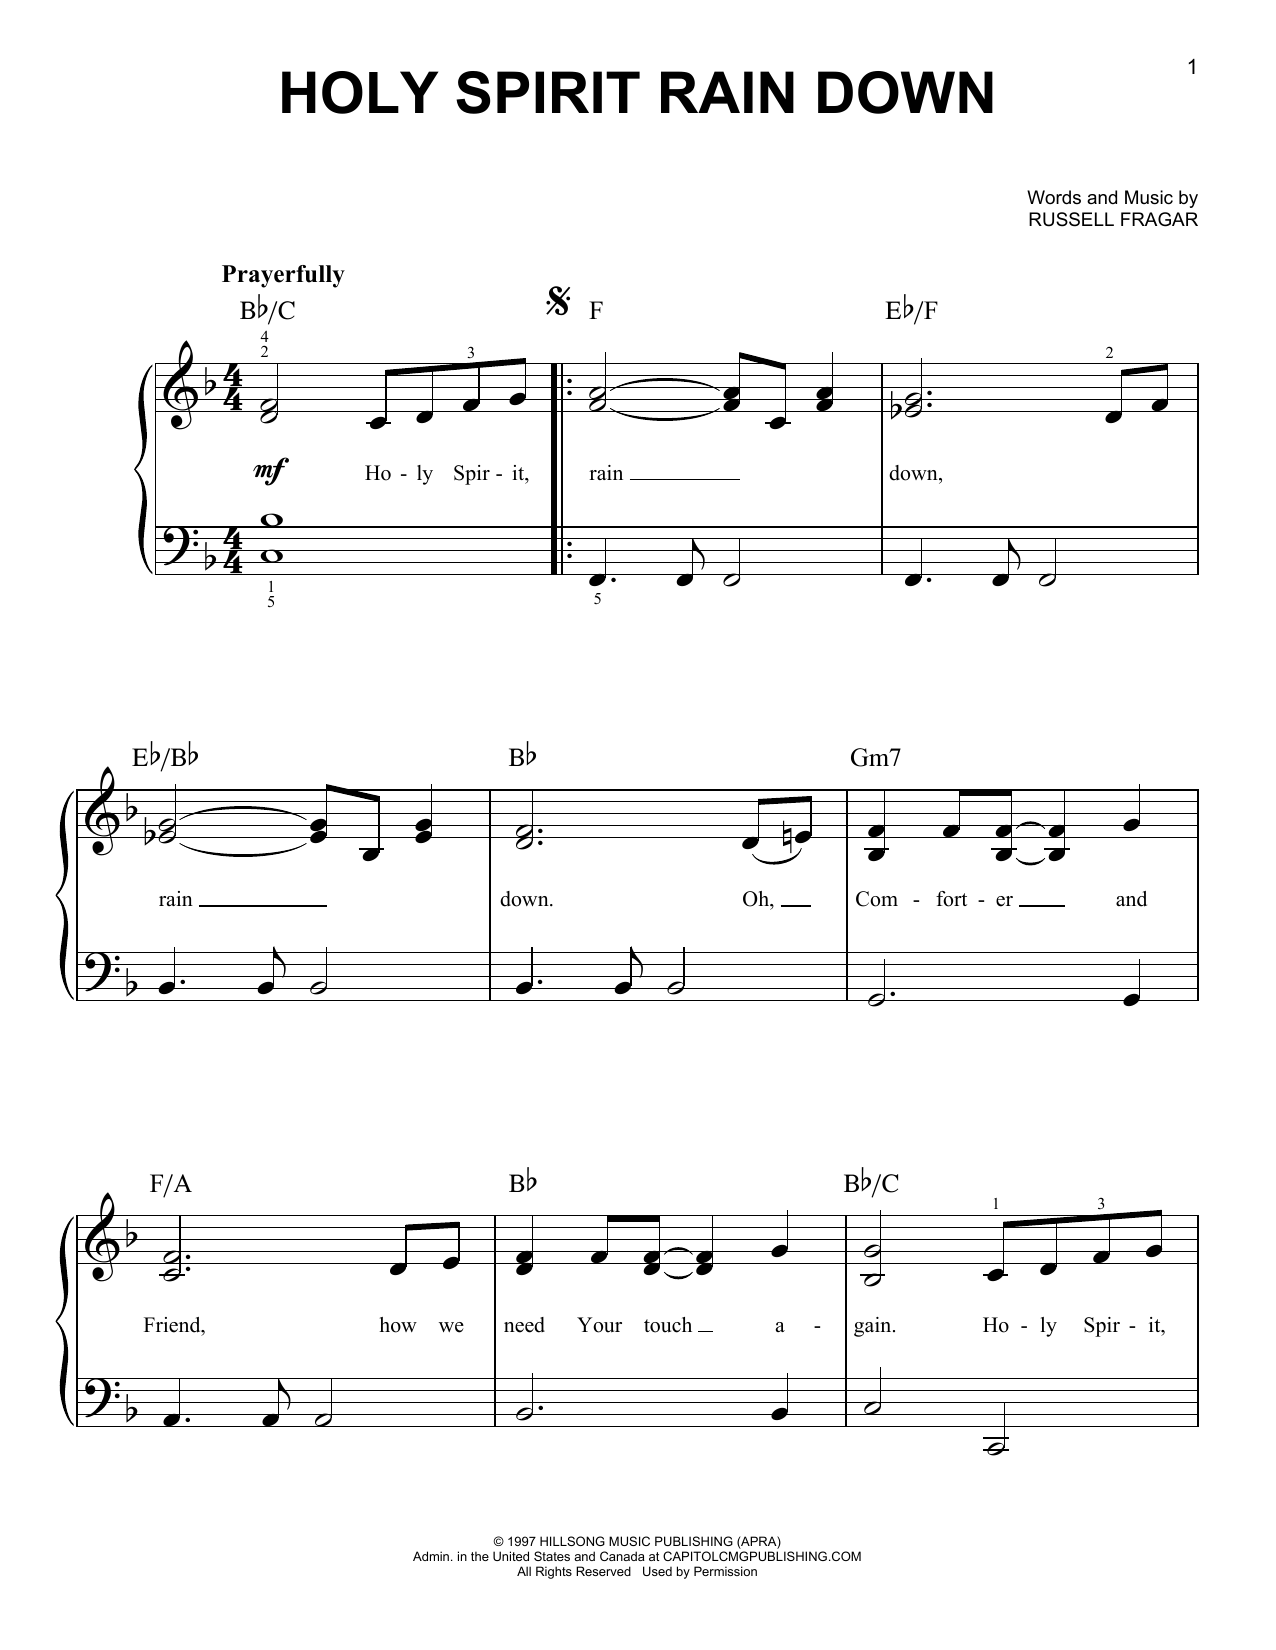 Russell Fragar Holy Spirit Rain Down Sheet Music Notes & Chords for Melody Line, Lyrics & Chords - Download or Print PDF